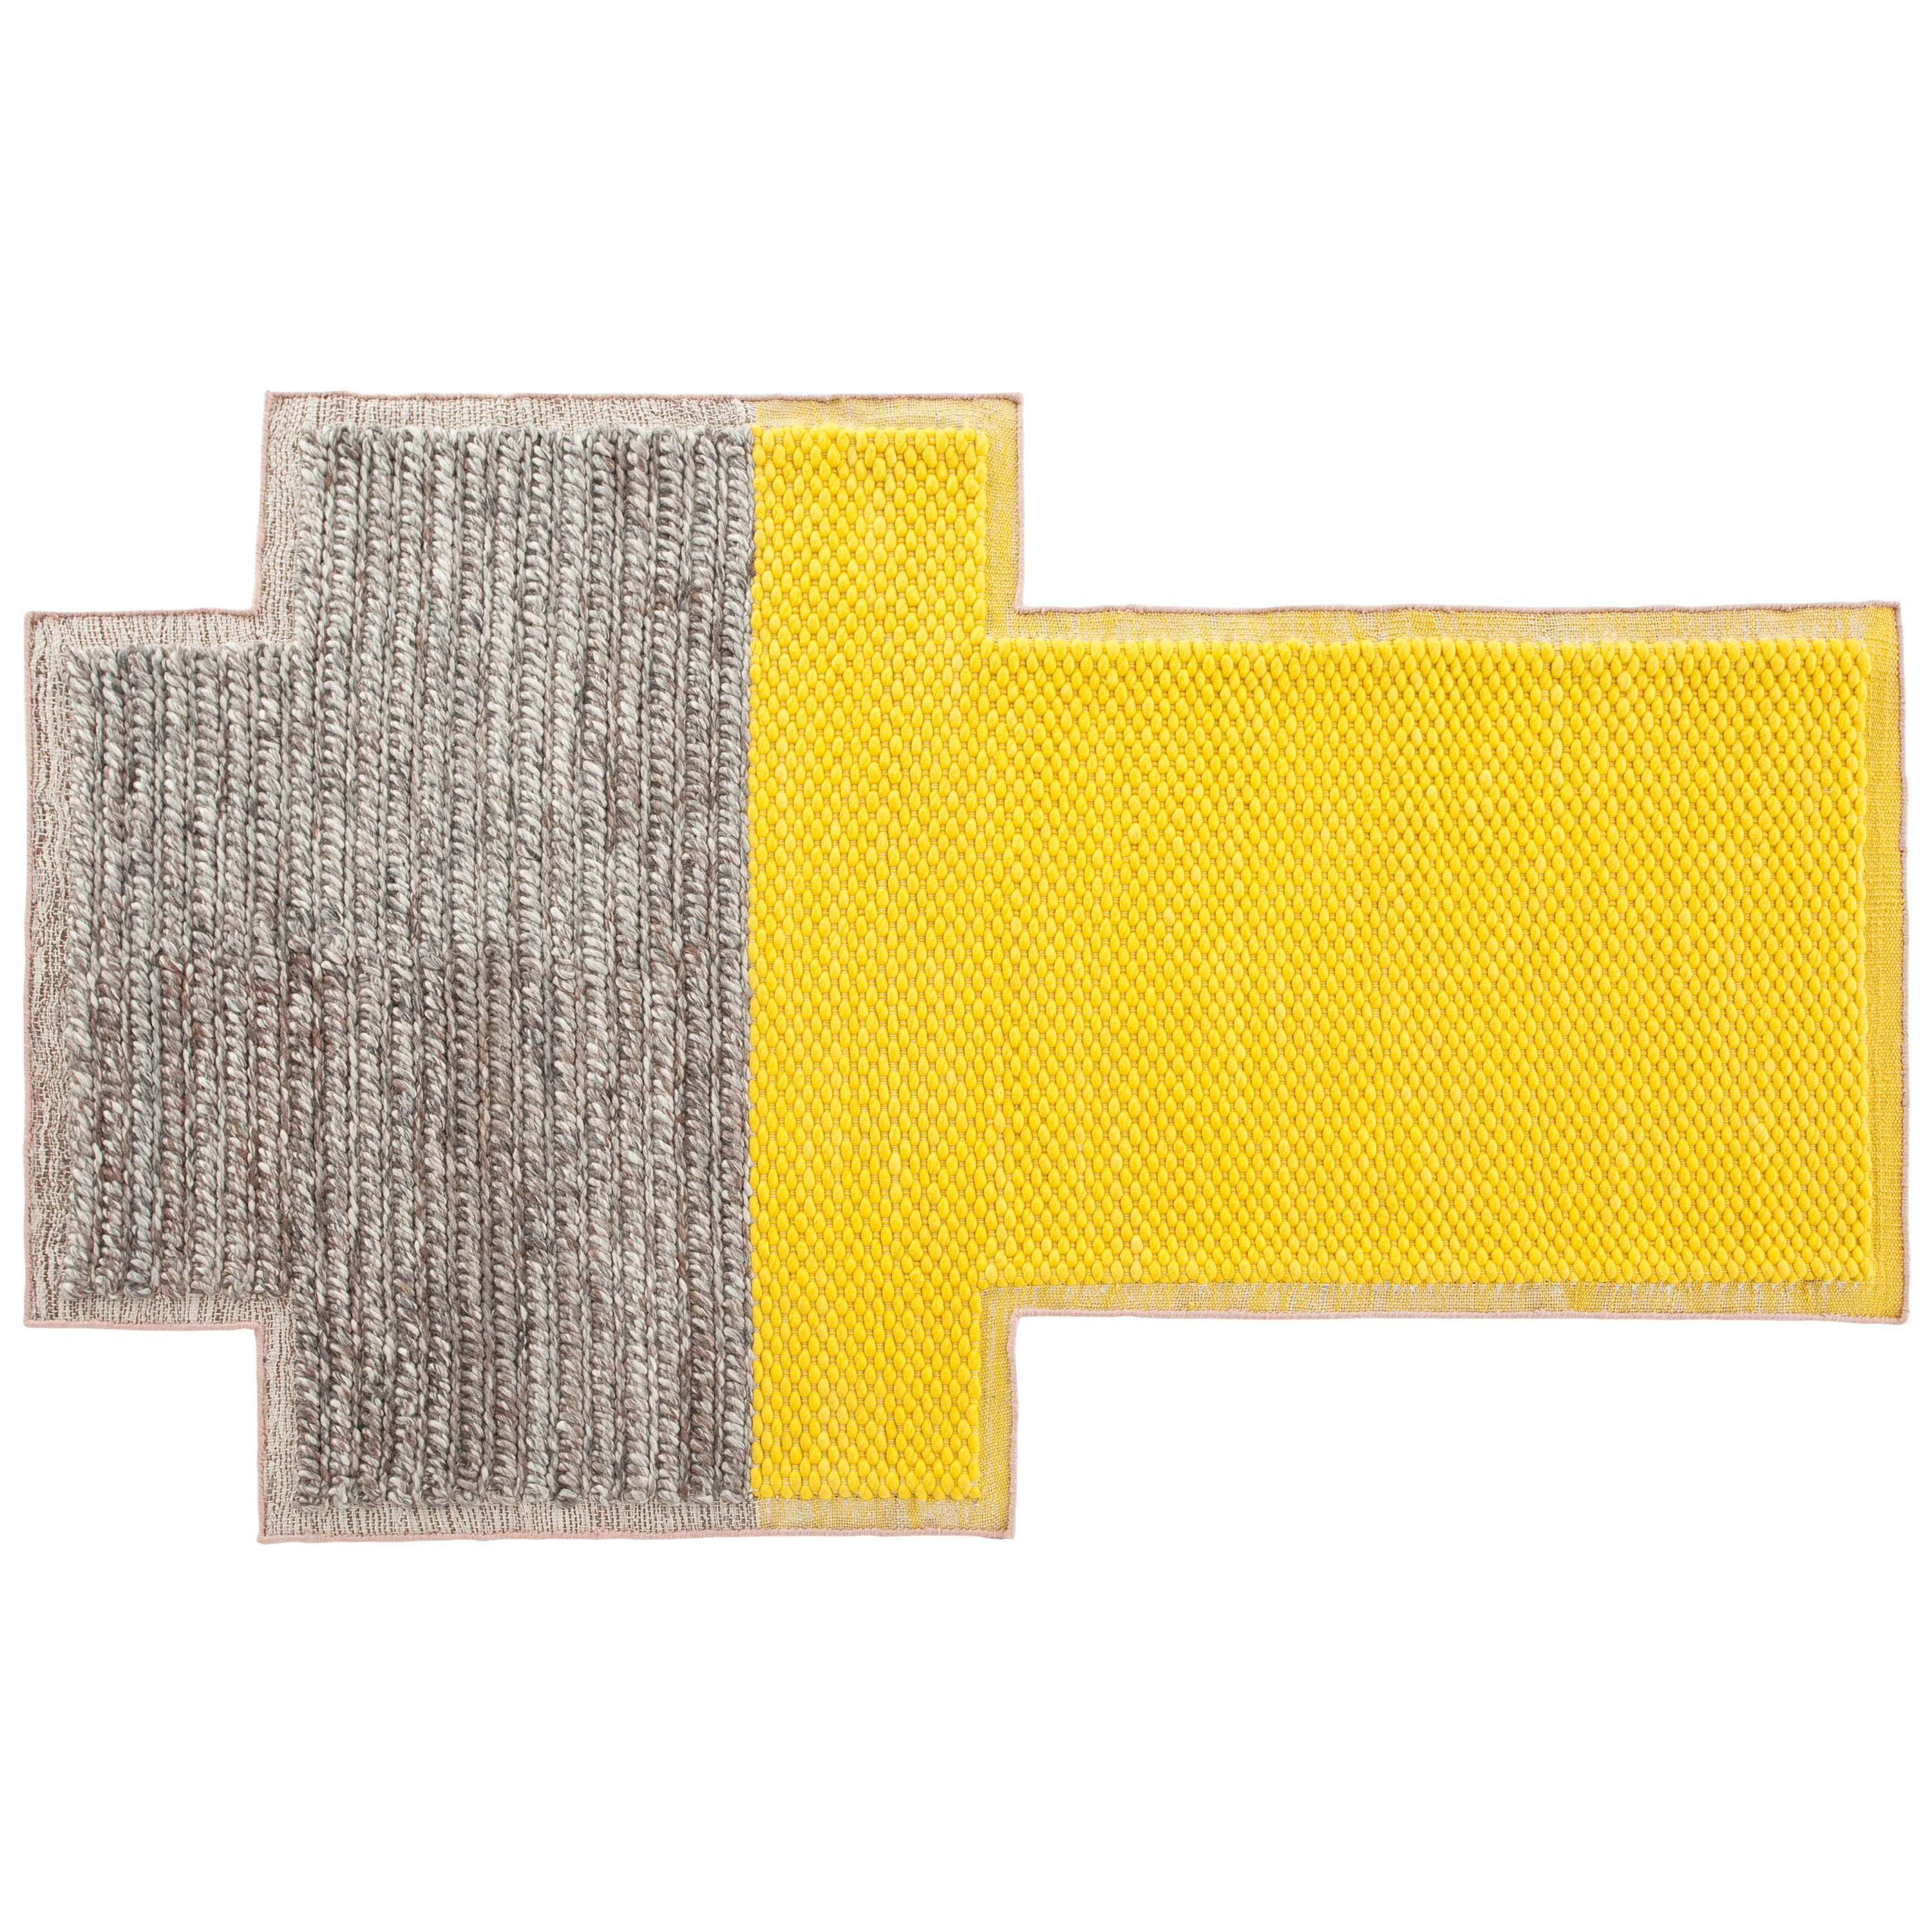 GAN Mangas Space Medium Rectangular Rug Plait in Yellow by Patricia Urquiola